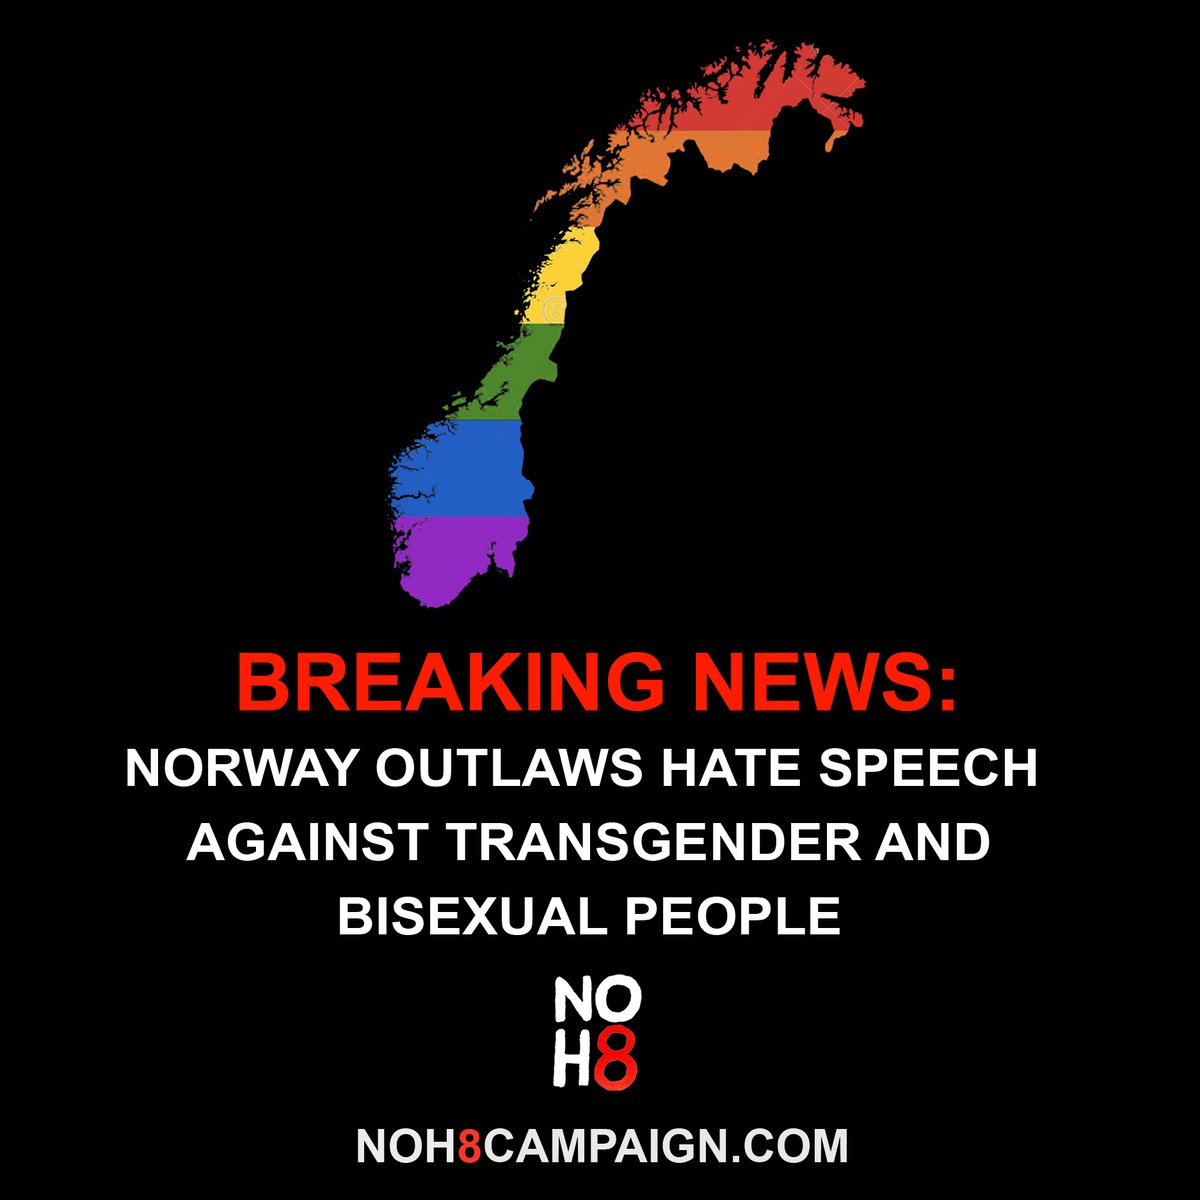 BREAKING: Norway outlaws hate speech against transgender and bisexual people #NOH8